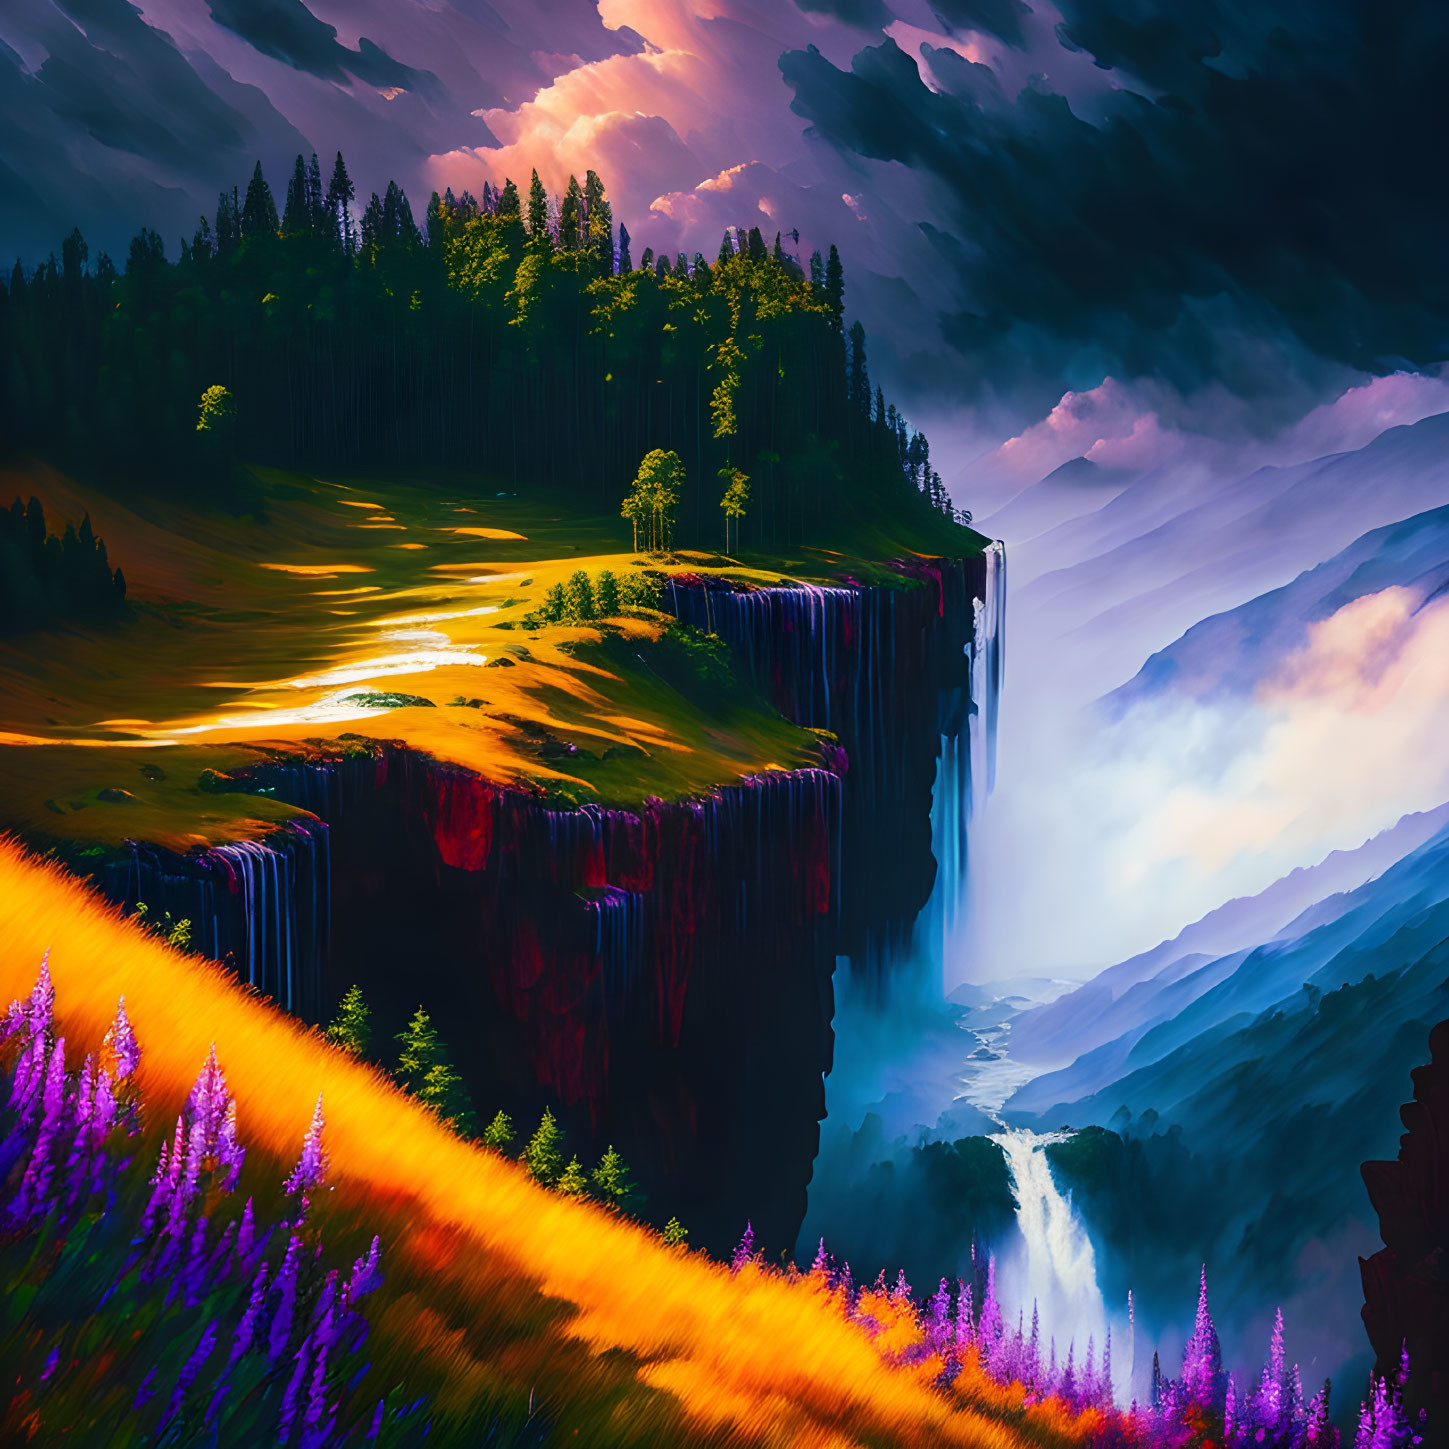 Digital Art: Cliff Waterfall with Mist, Forest, Light Beam, Purple Flowers